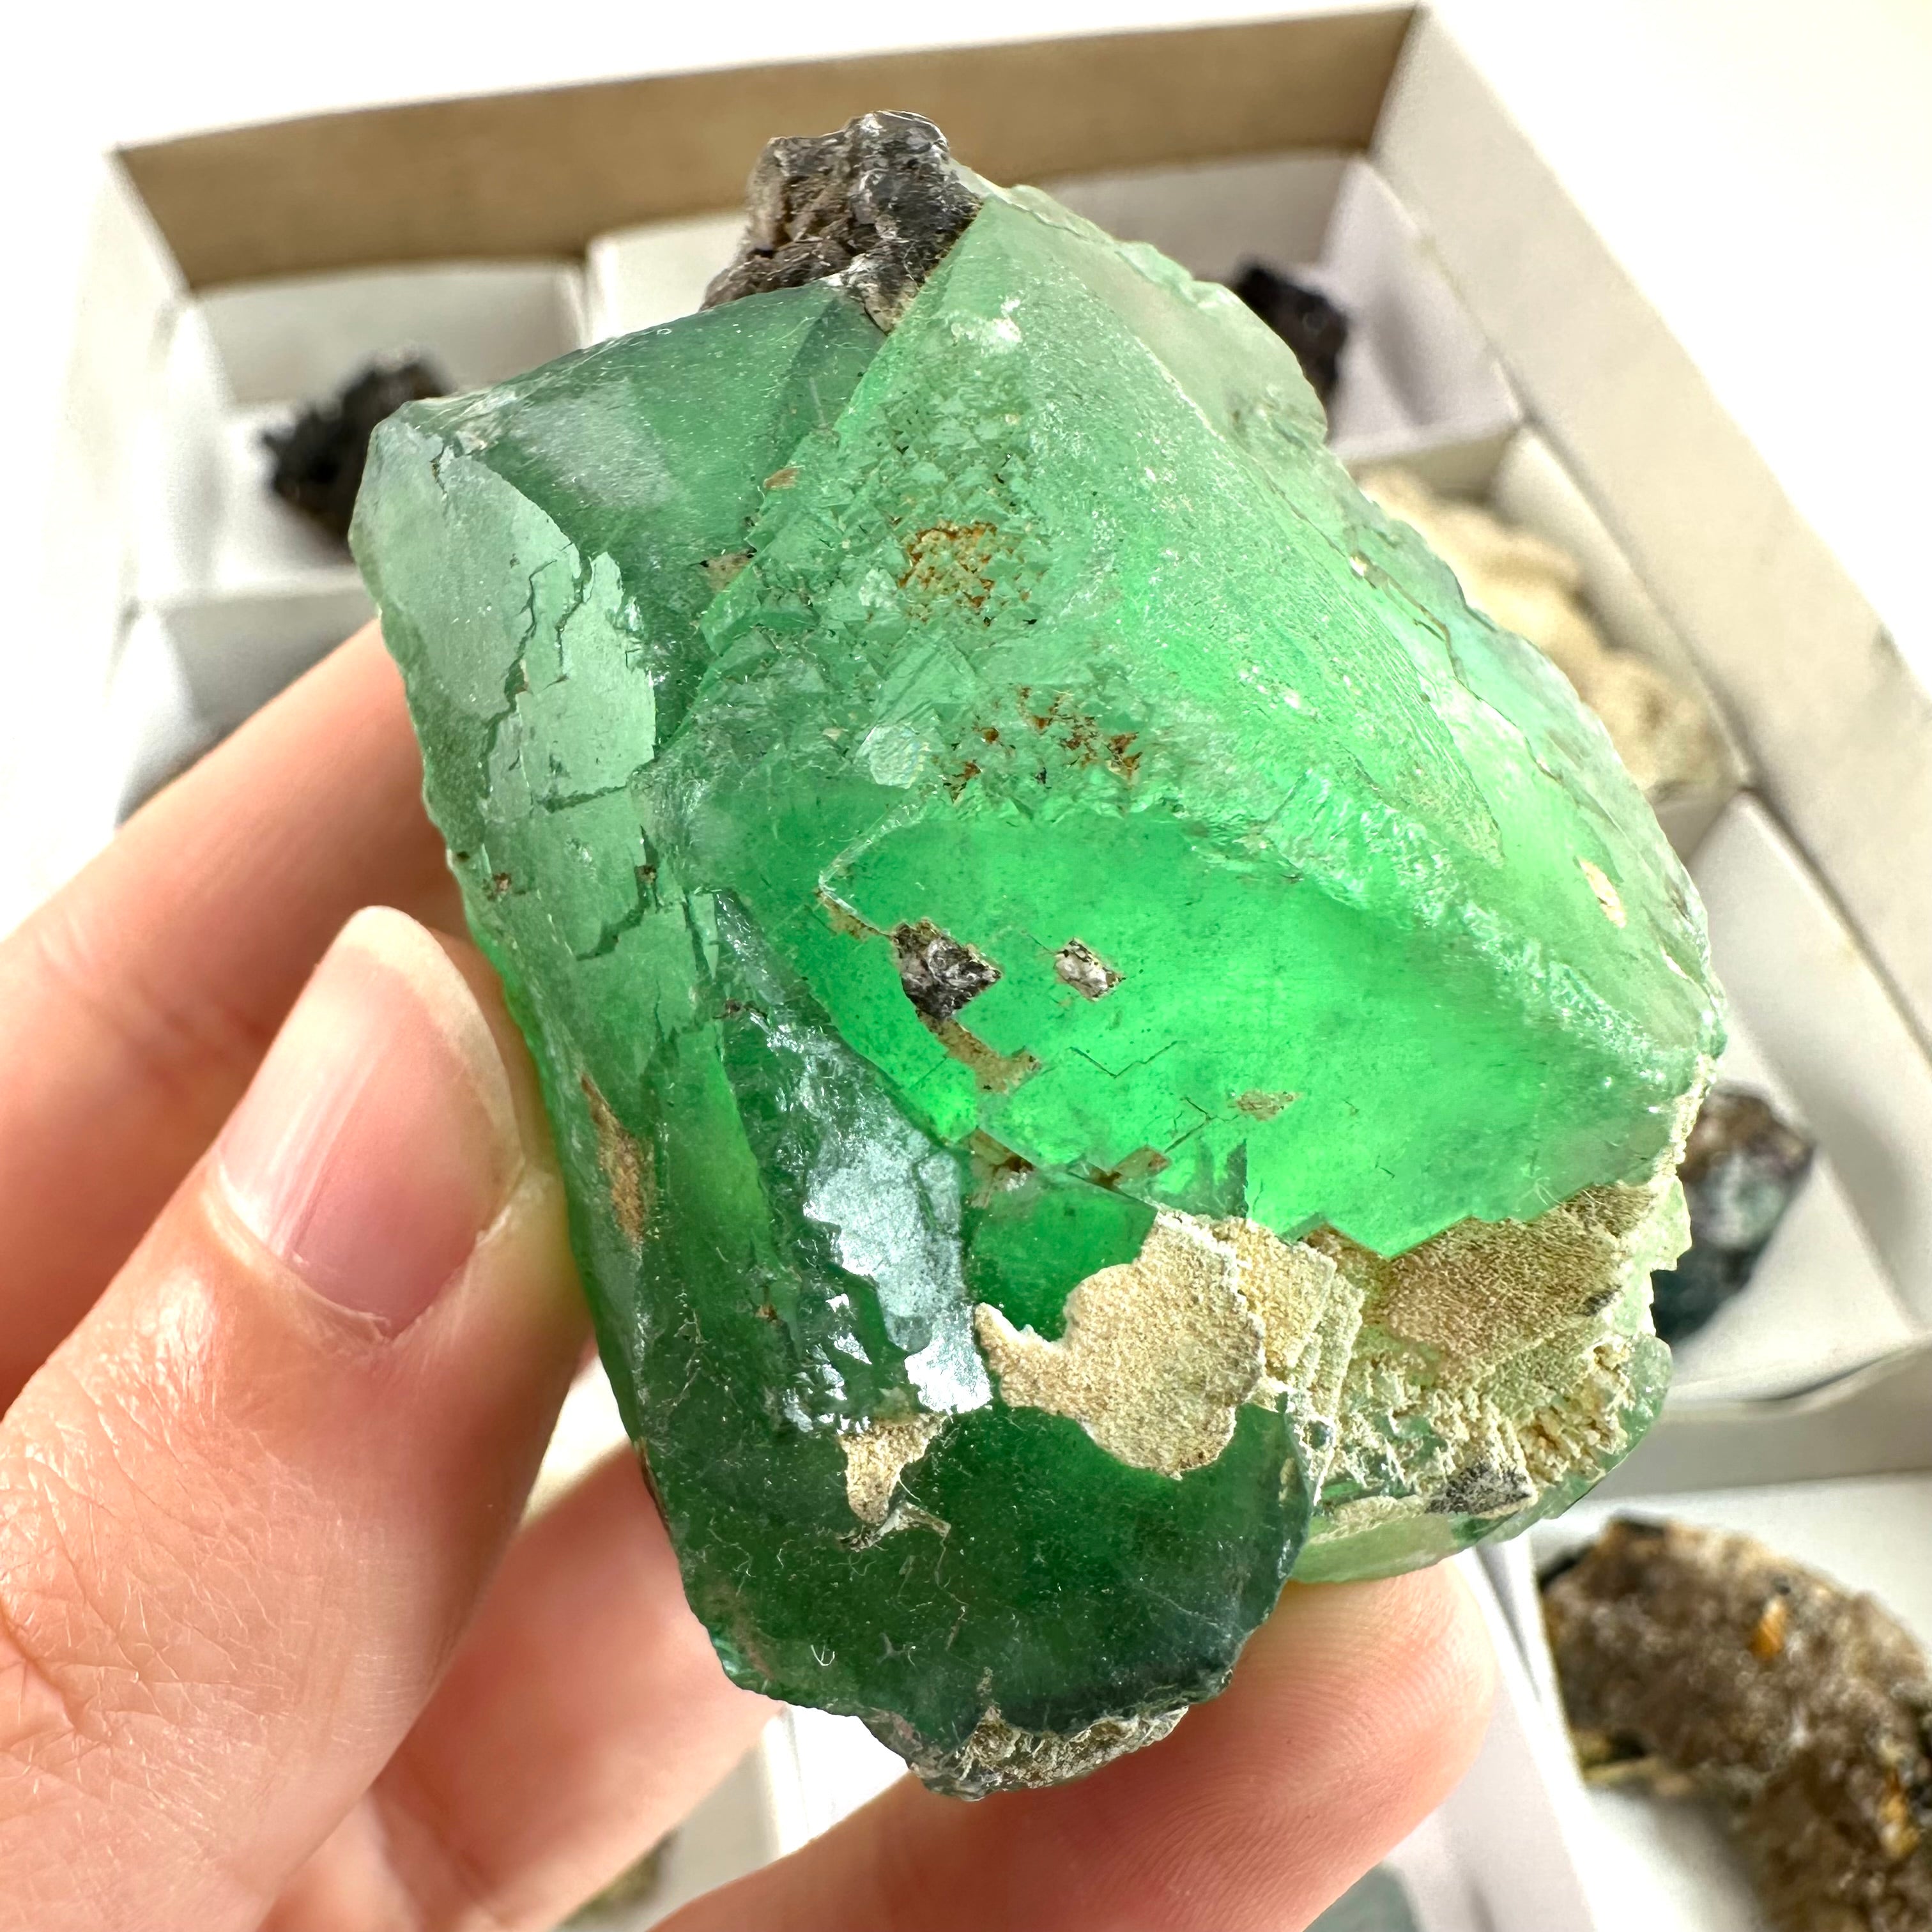 18 Piece/ 554g Flat of Mixed Minerals from Namibia | Okorusu Fluorite, Aquamarine, Hyalite Opal, Amethyst, Smoky Quartz